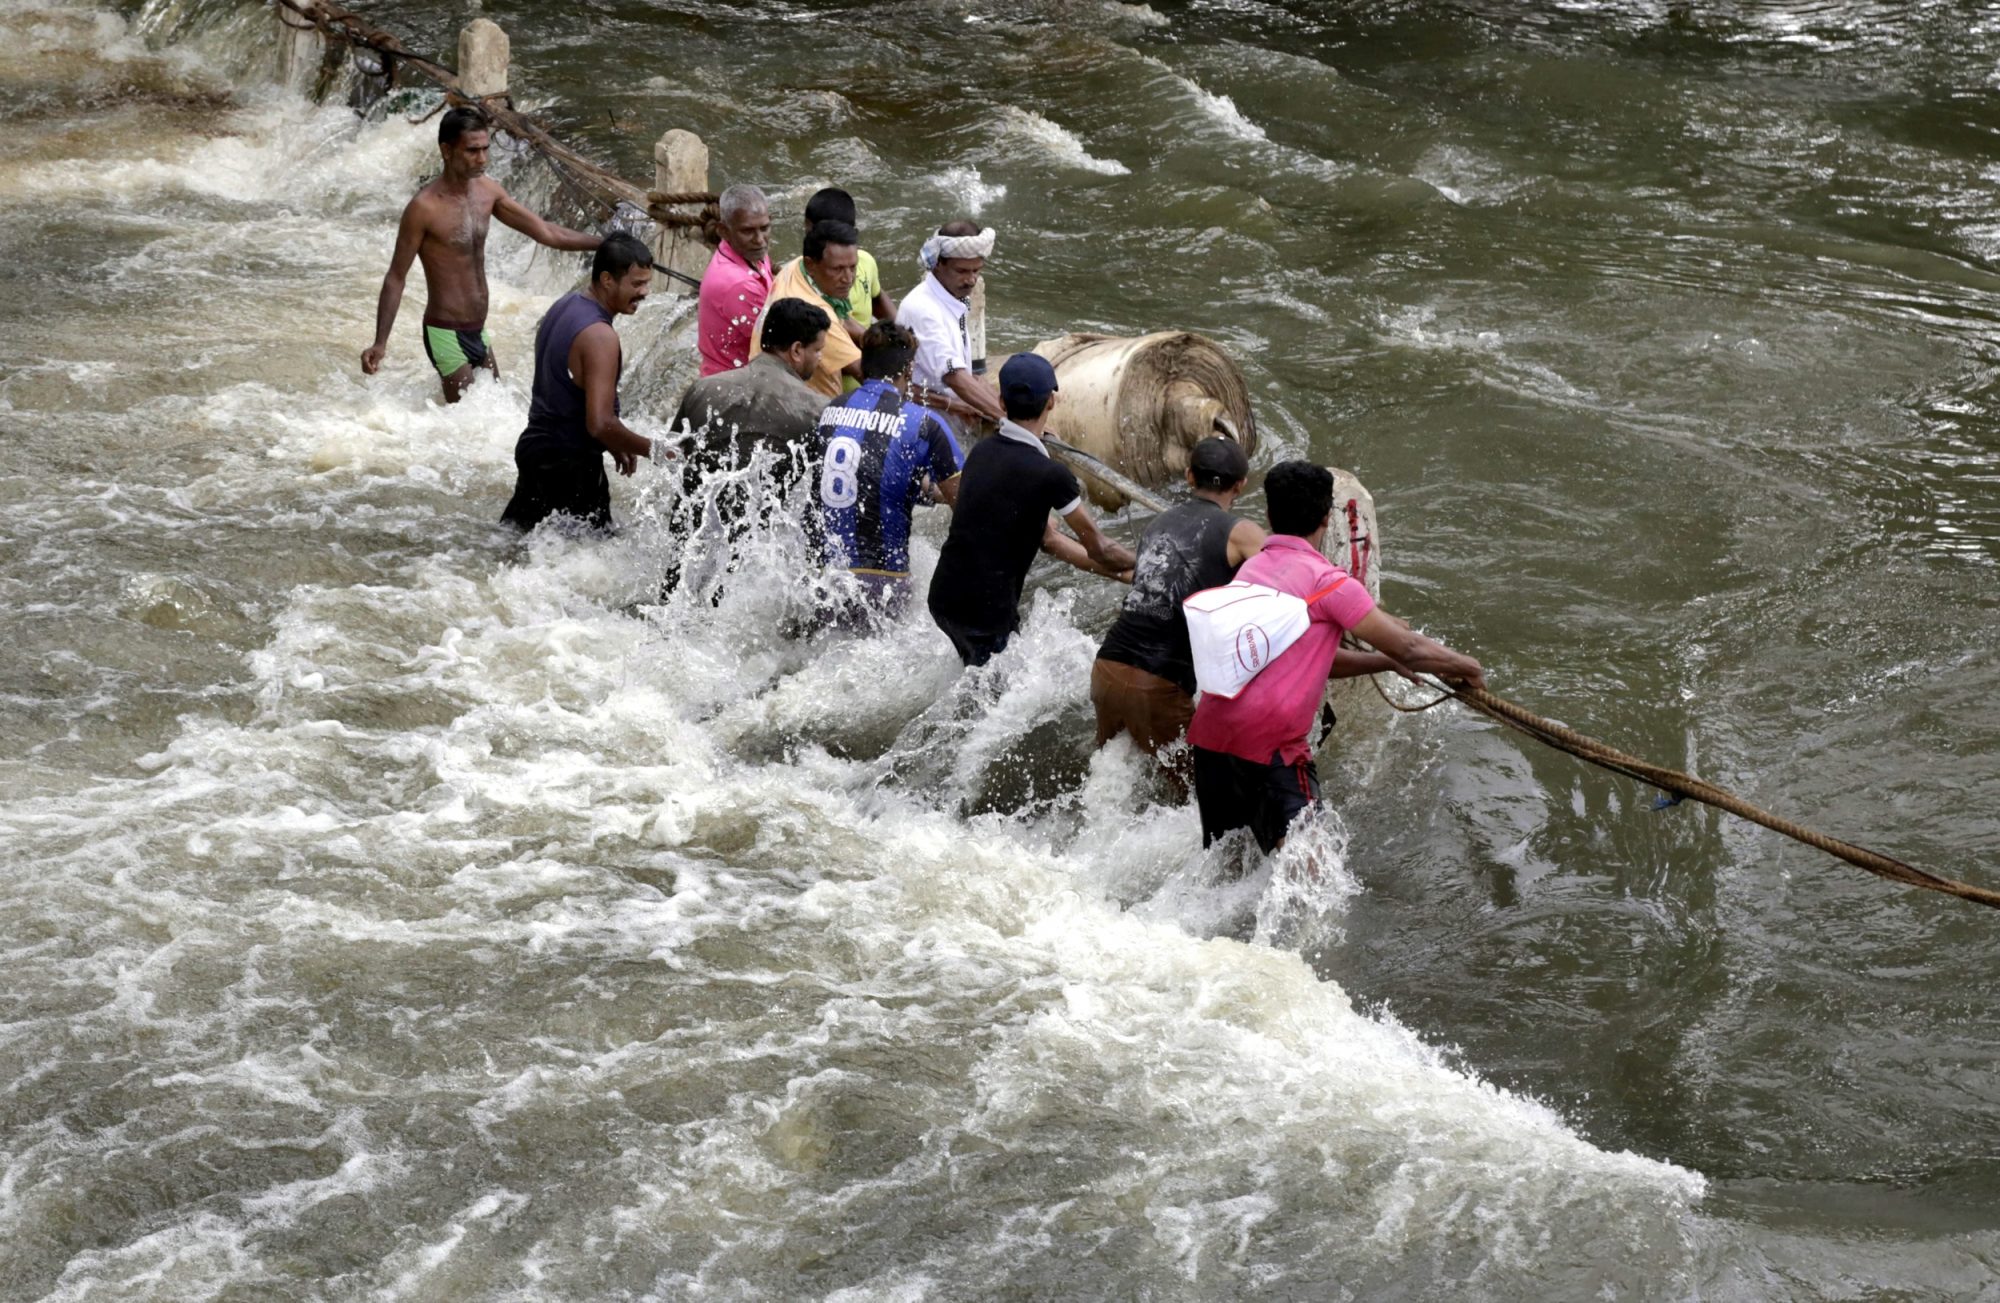 14 killed in Sri Lanka floods, landslides